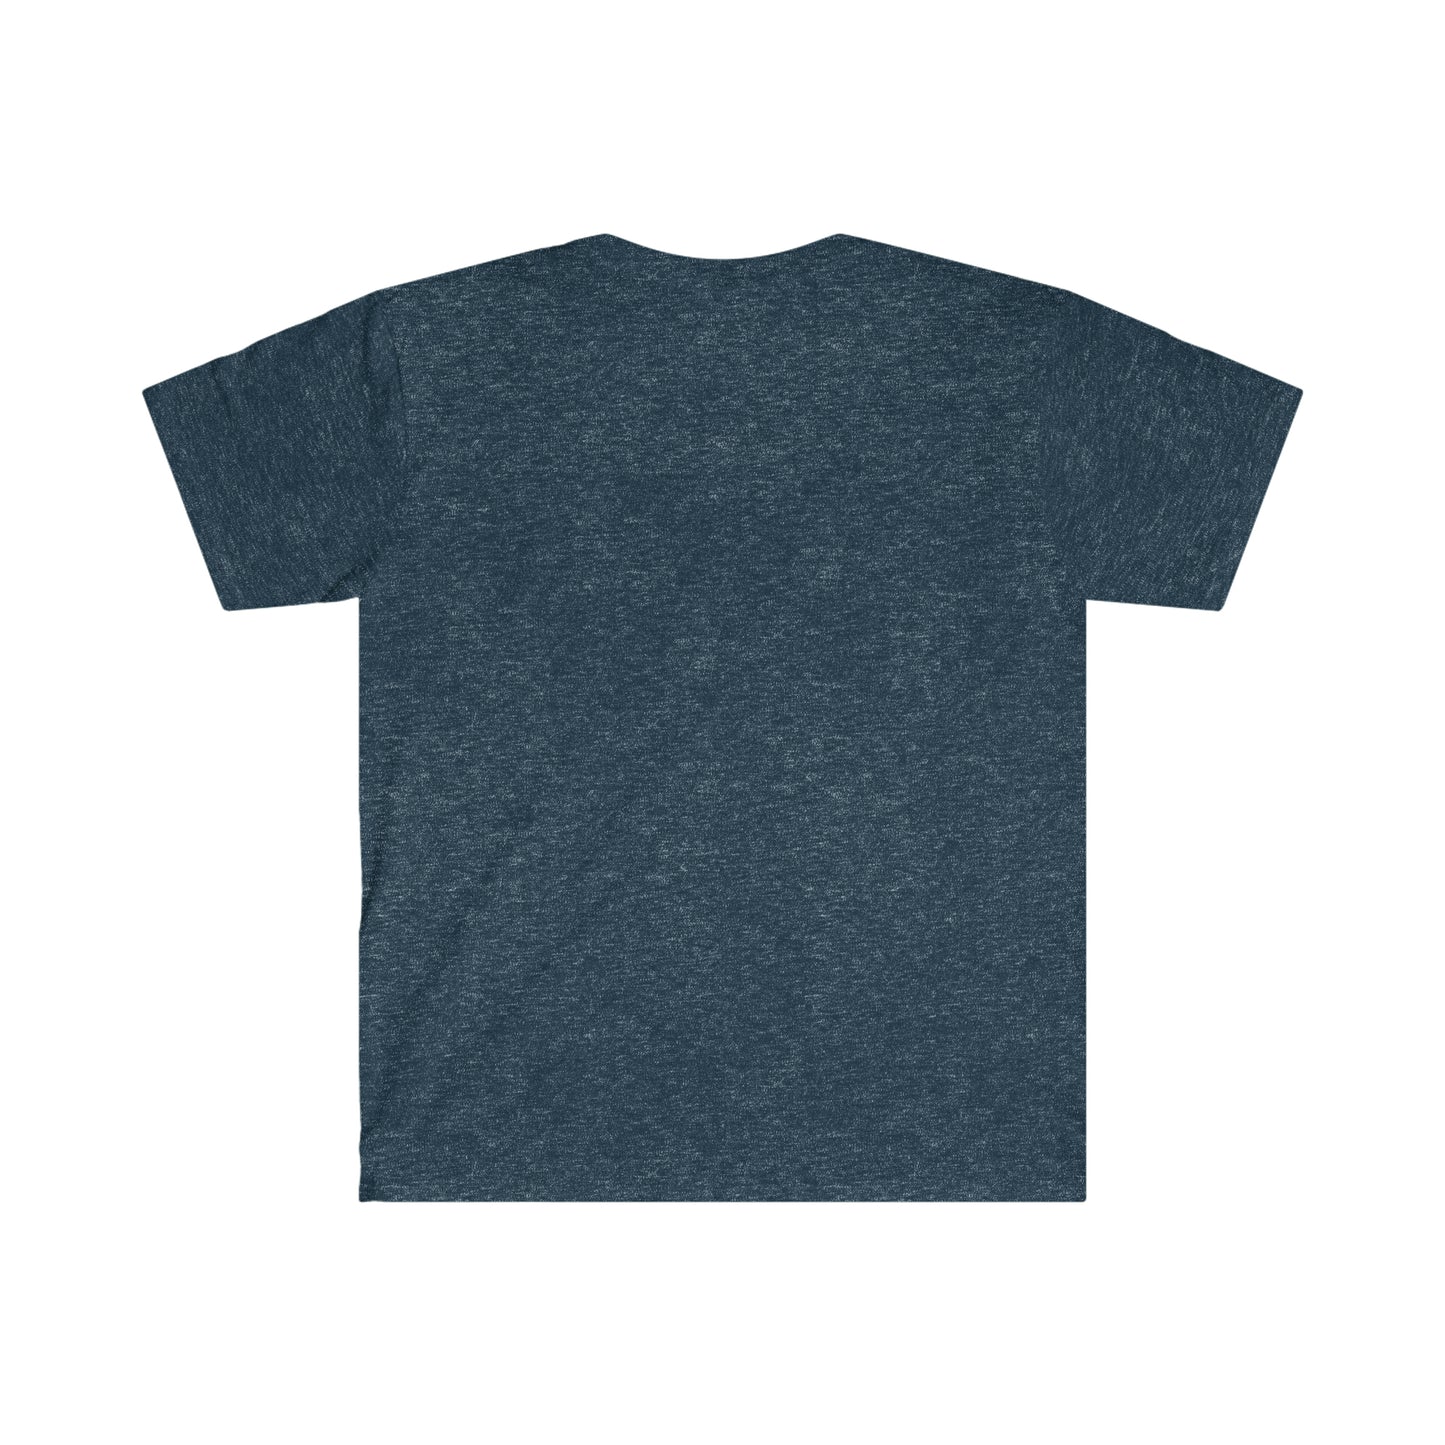 Murcielagos Necesitan Agave - Camiseta Softstyle Unisex